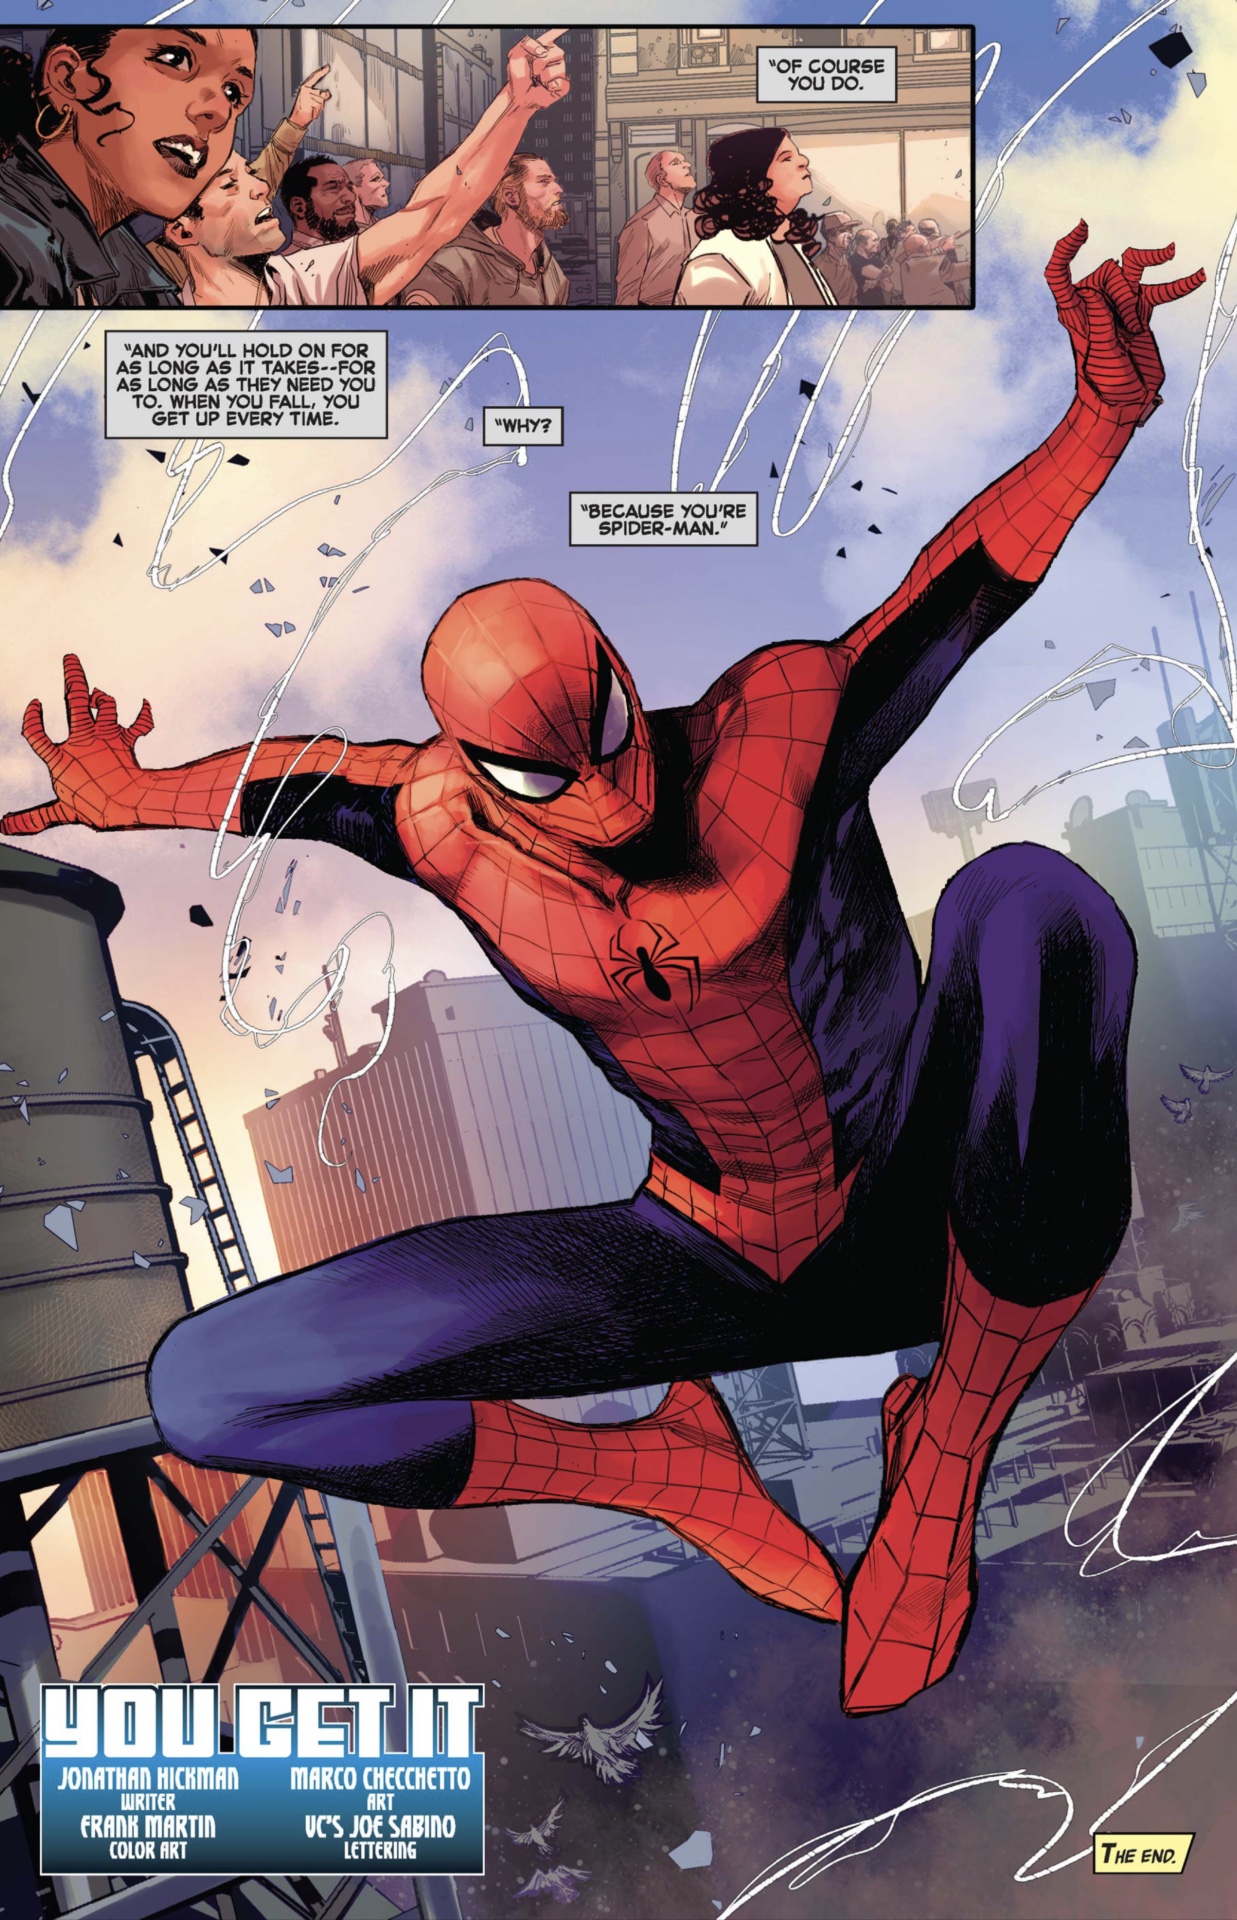 Ultimate SpiderMan returns with Hickman and Checchetto